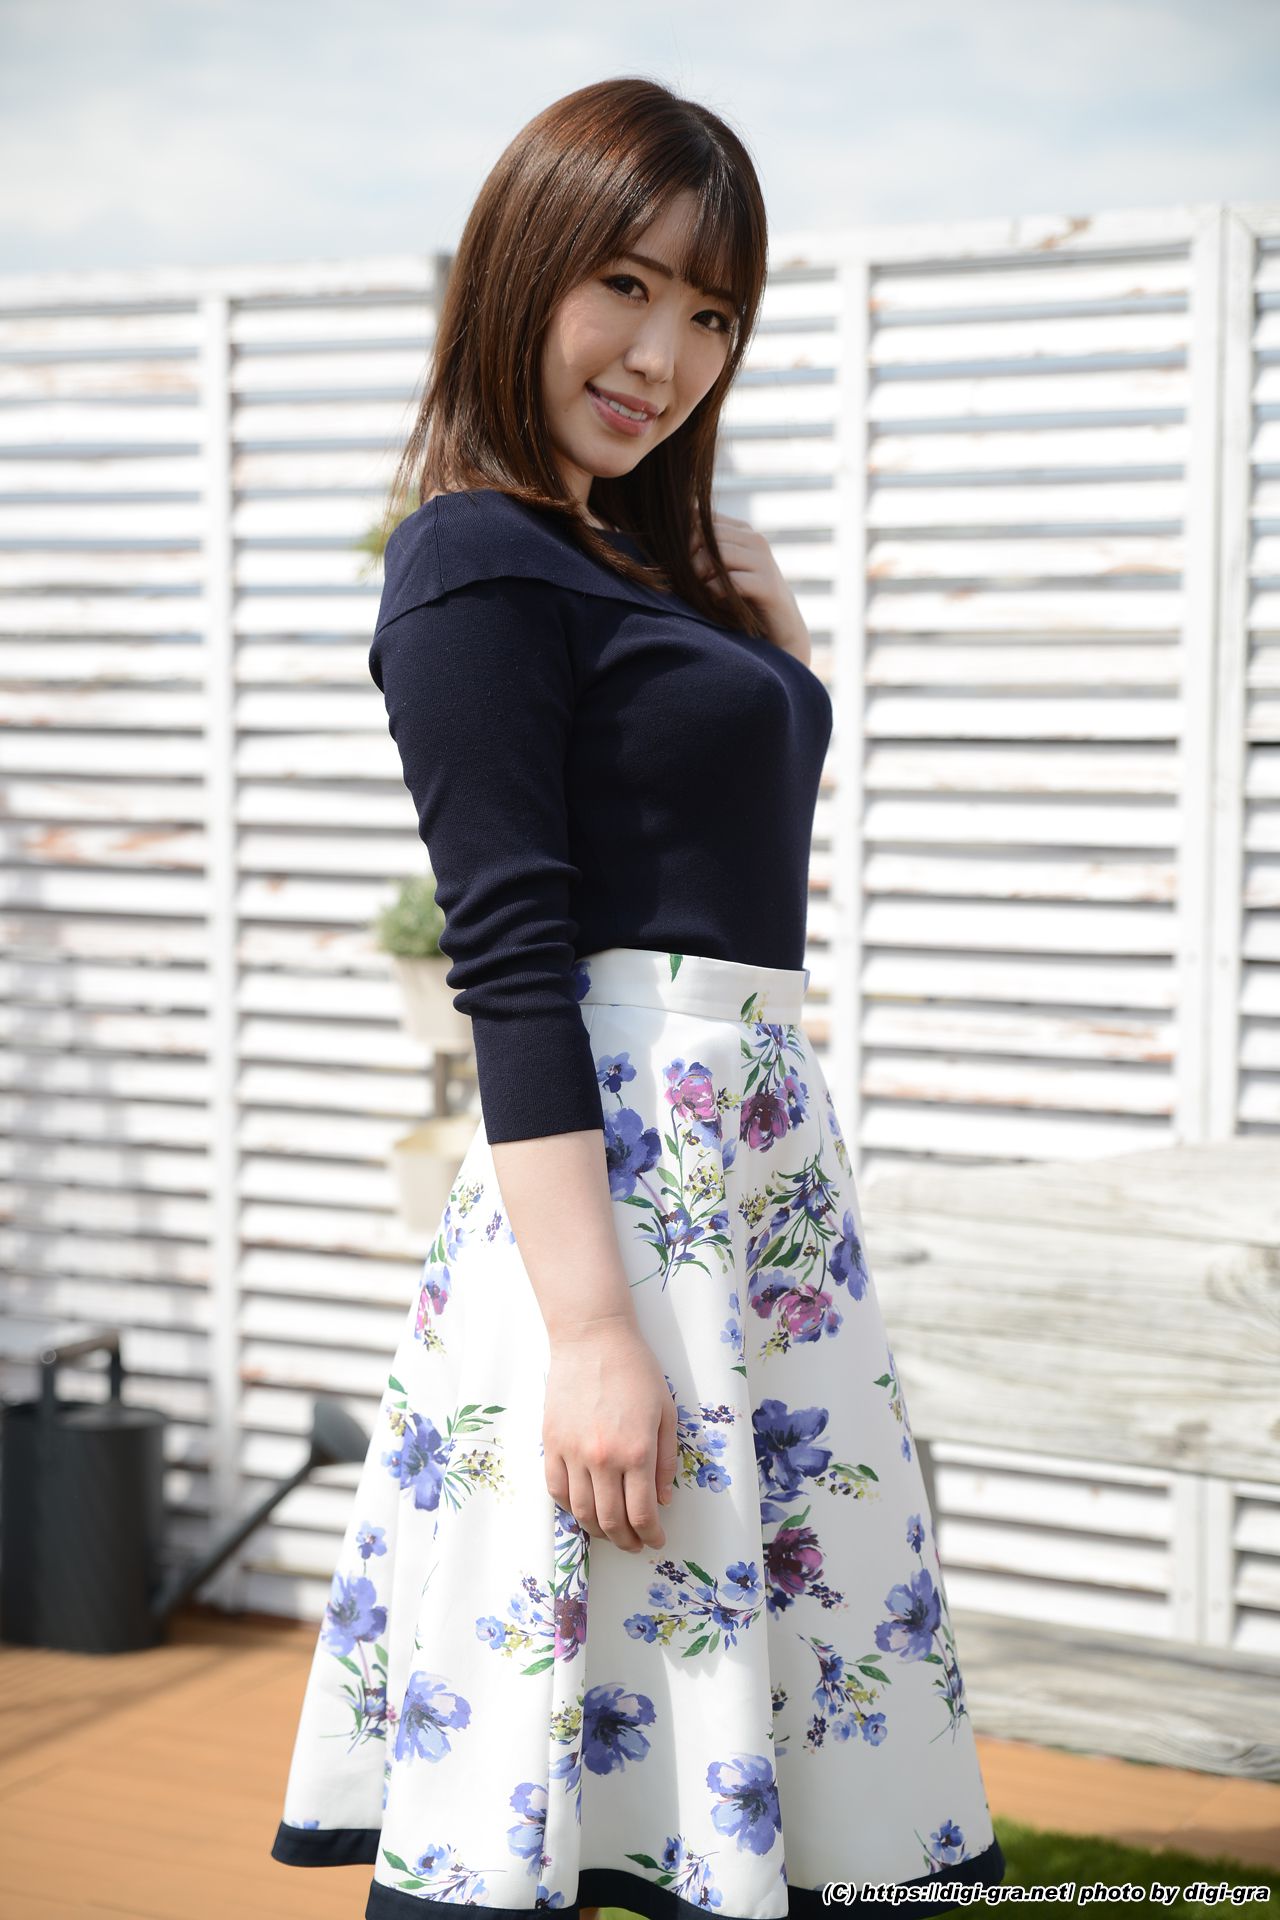 [DIGI-GRA] Haruna Kawakita Hebei は / Hebei Spring Pastose 01 Photo Album